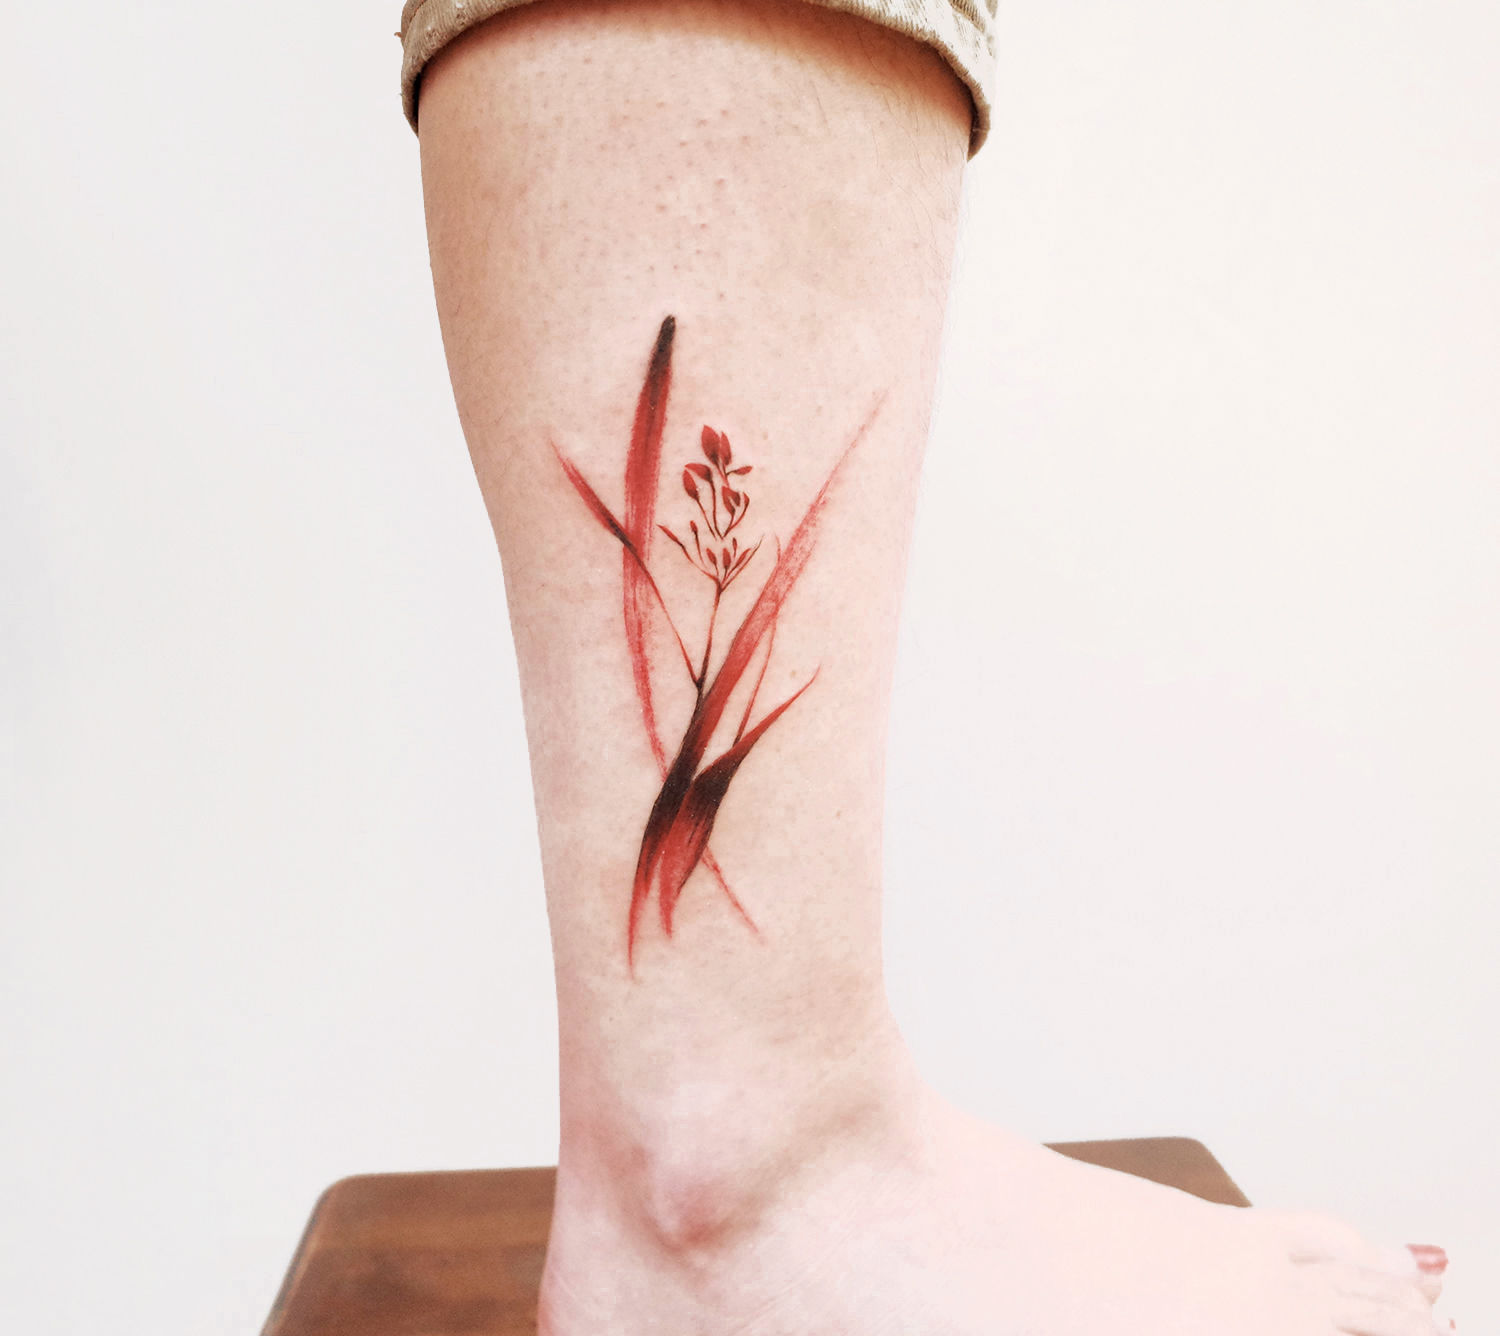 red plant tattoo, painting like on leg